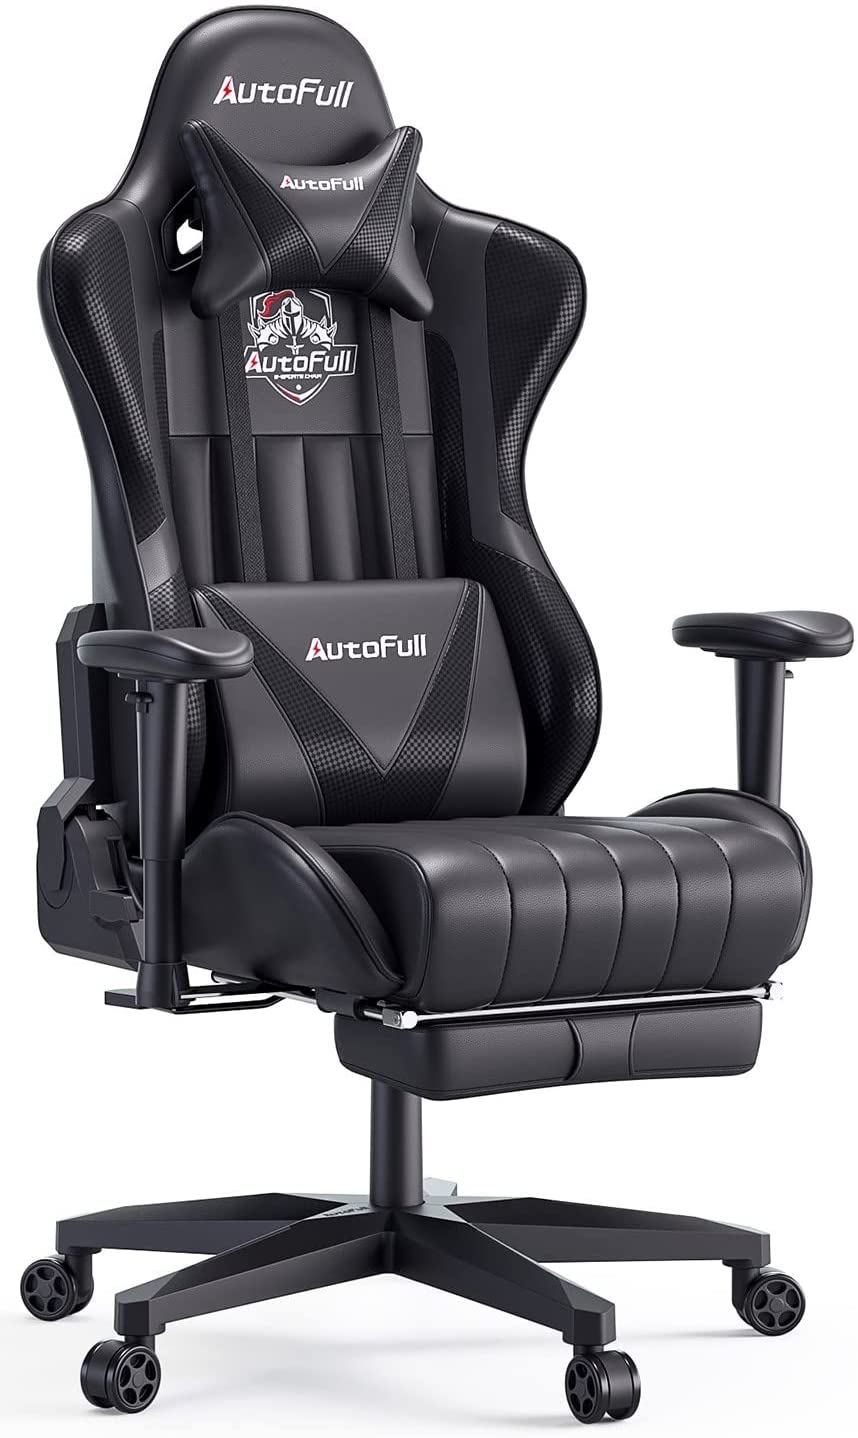 AutoFull chaise gamer en cuir noir